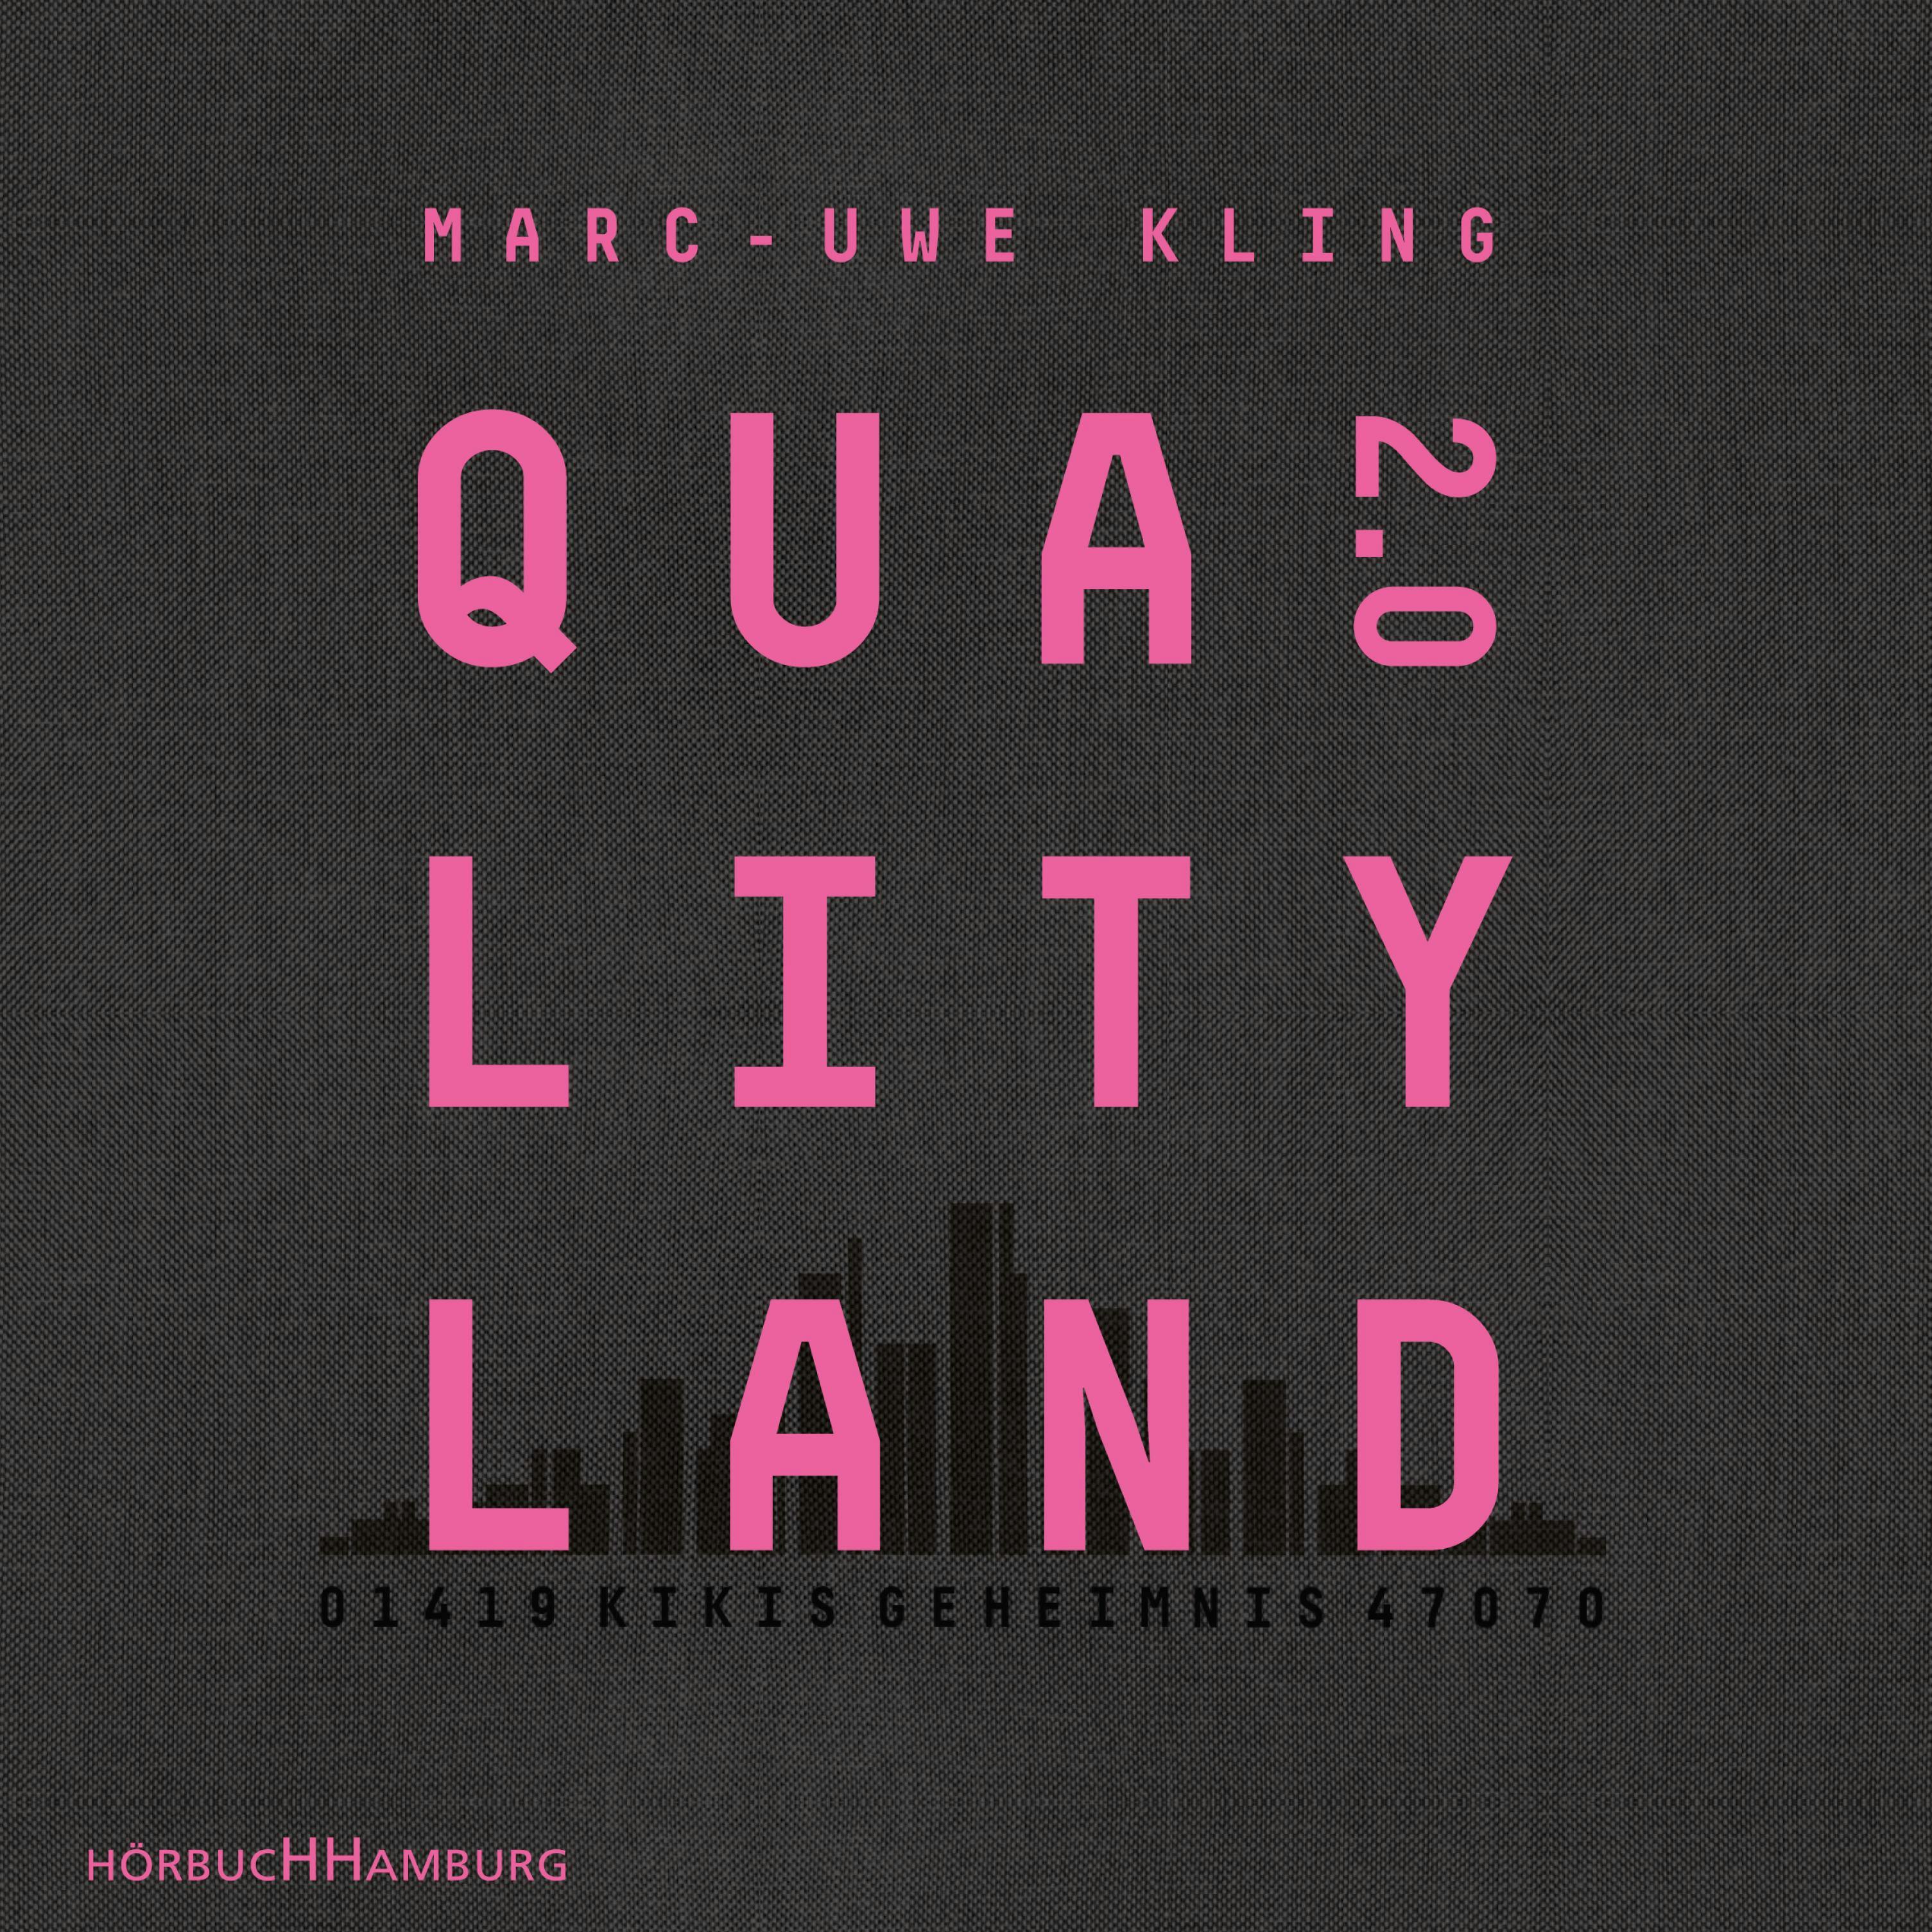 QualityLand 2.0: Kikis Geheimnis - undefined